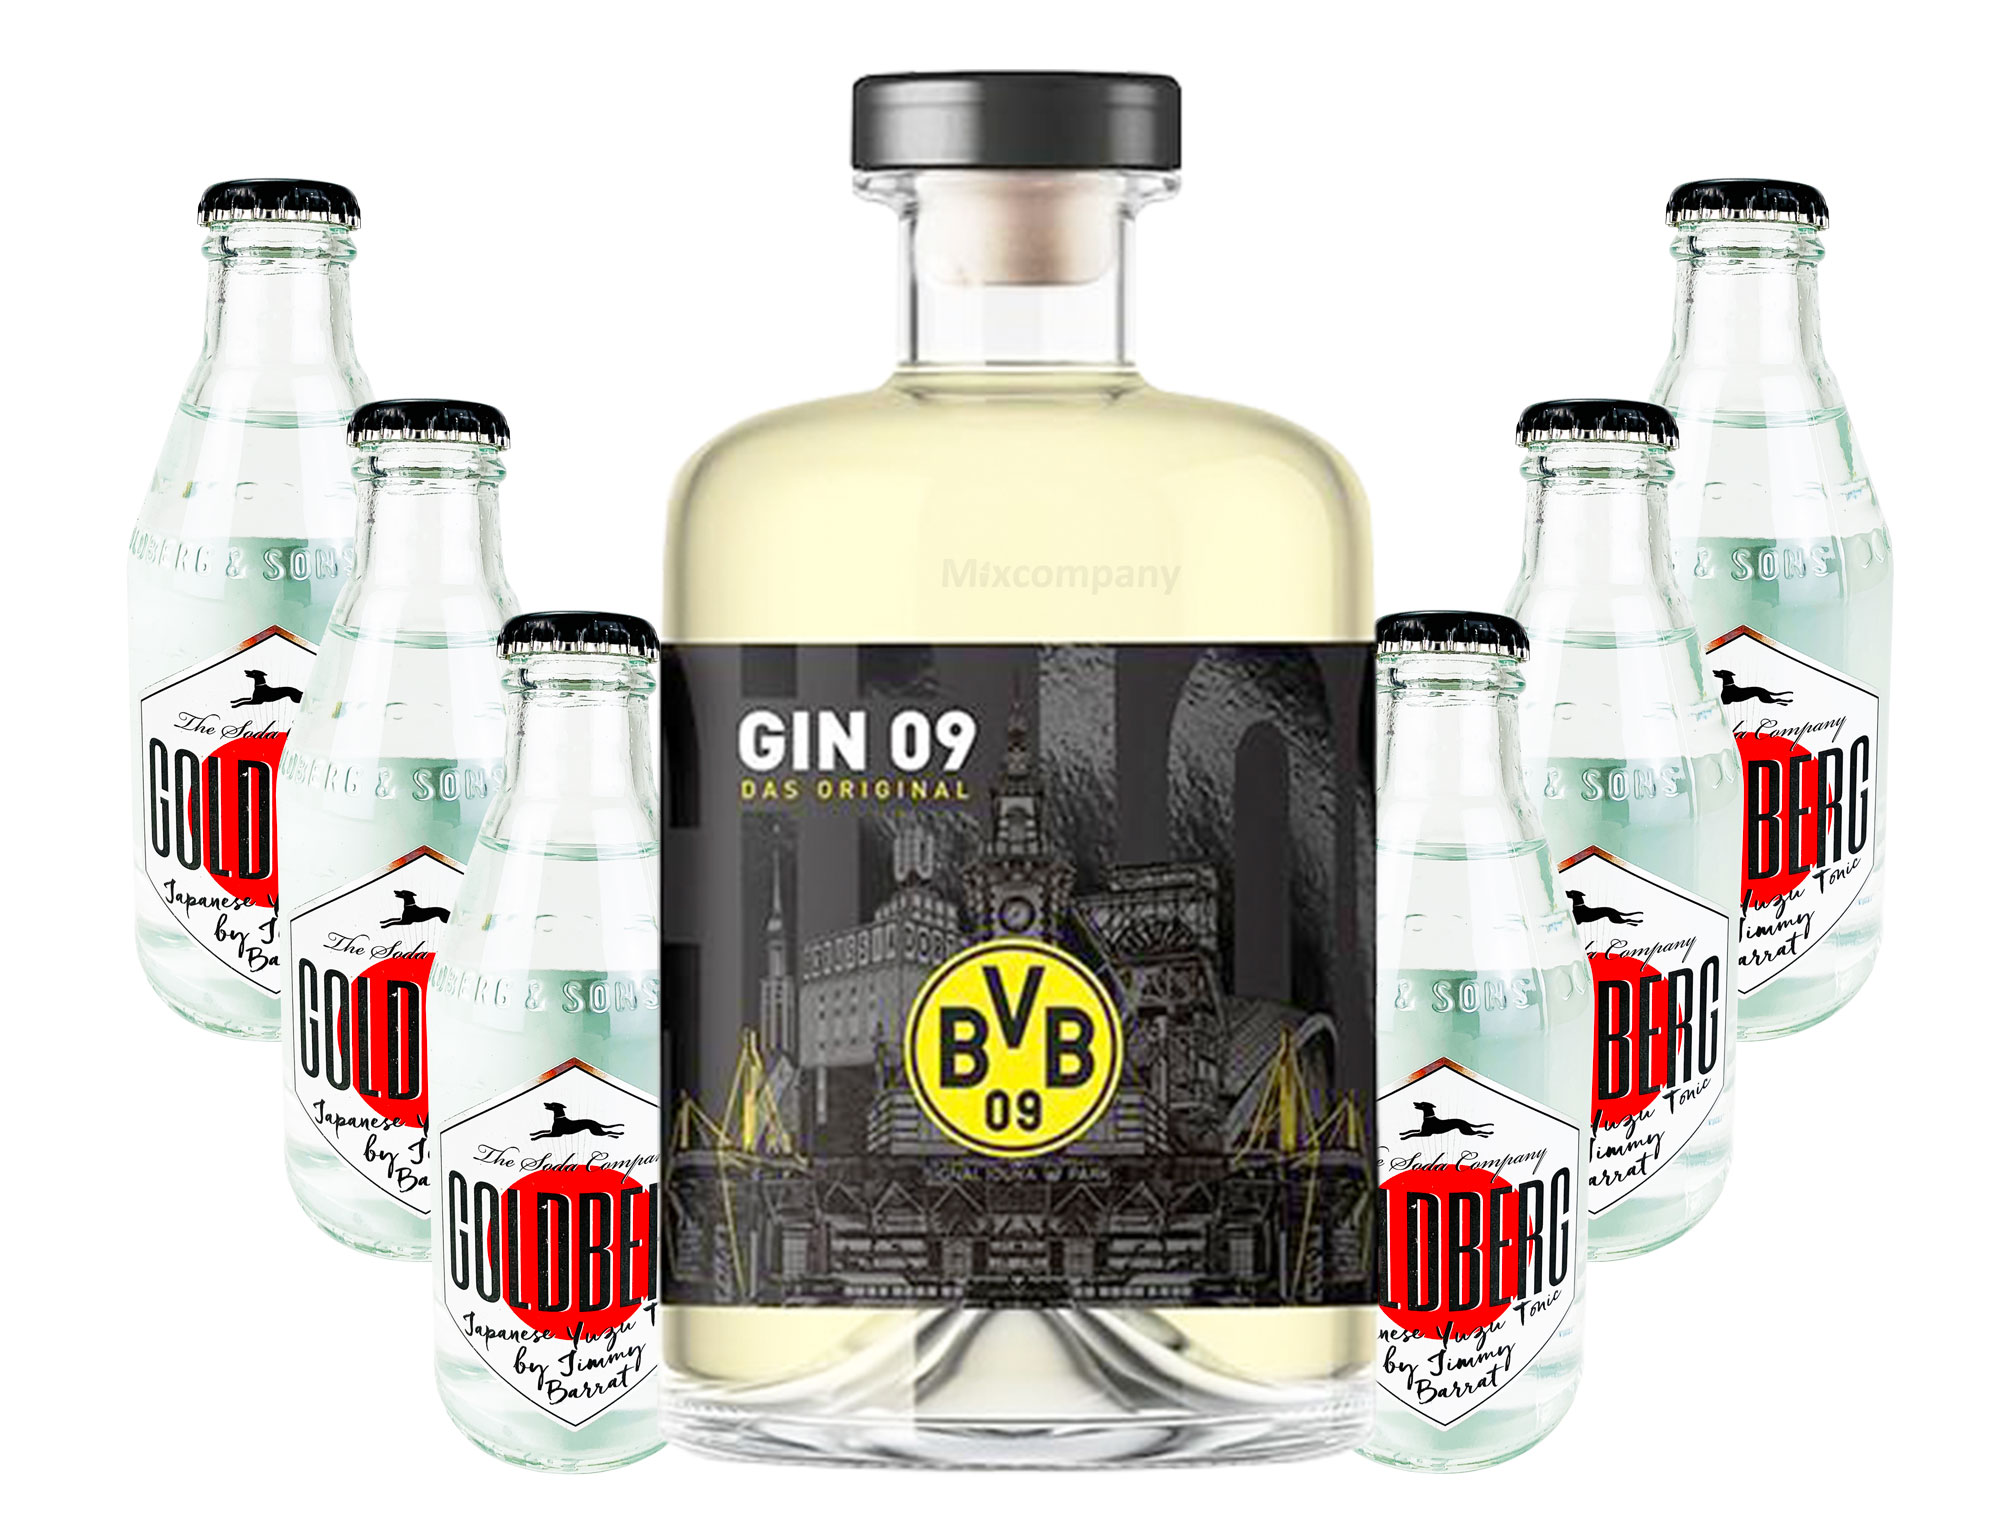 BVB Gin 09 Das Original 0,5l 500ml (43% Vol) + 6xGoldberg Japanese Yuzu Tonic 0,2l MEHRWEG inkl. Pfand - [Enthält Sulfite]